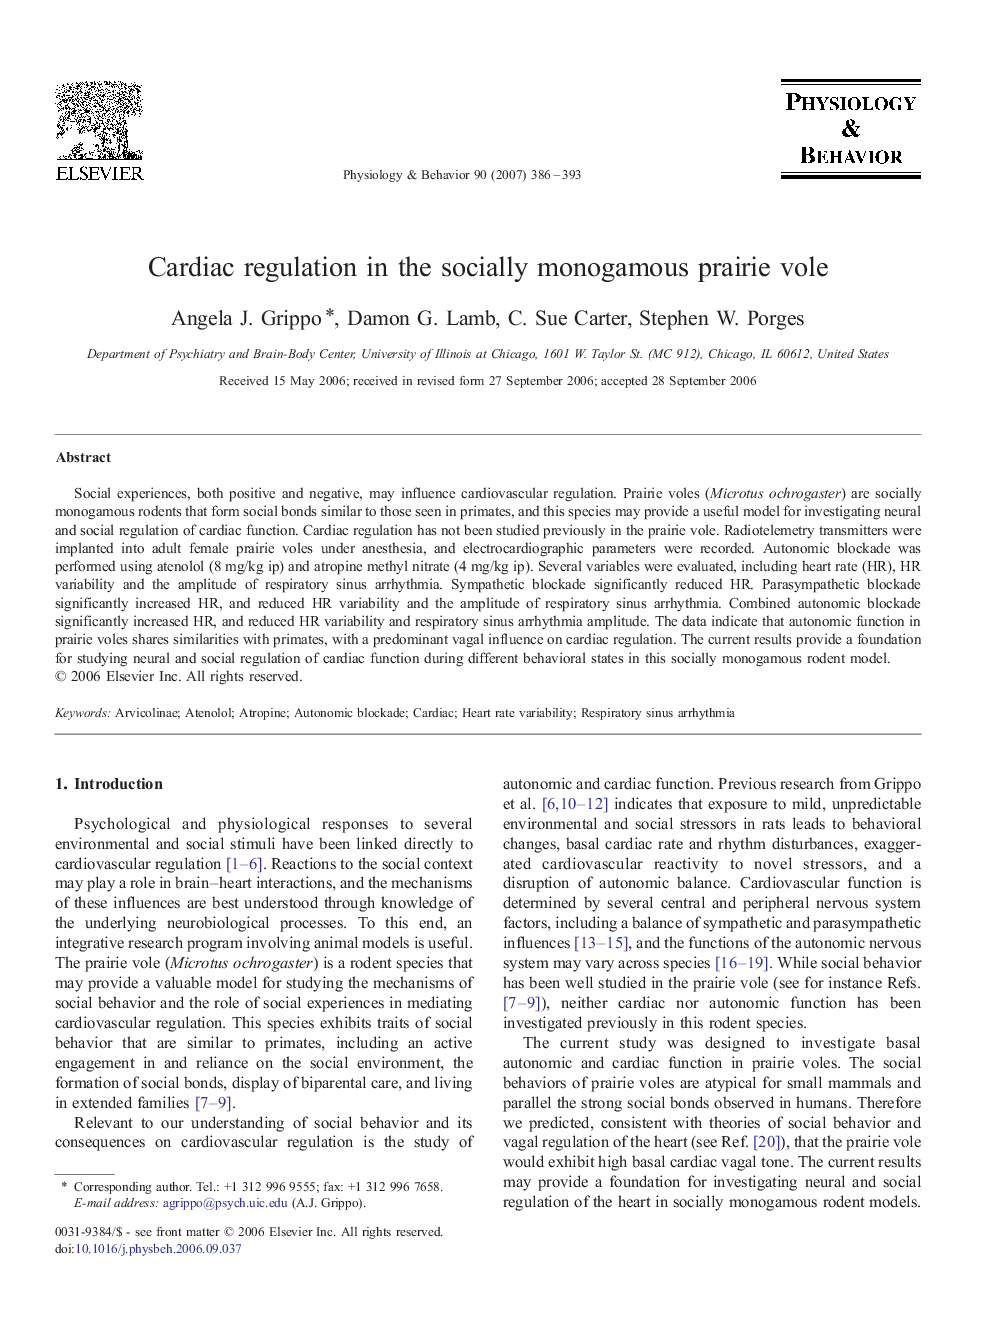 Cardiac regulation in the socially monogamous prairie vole